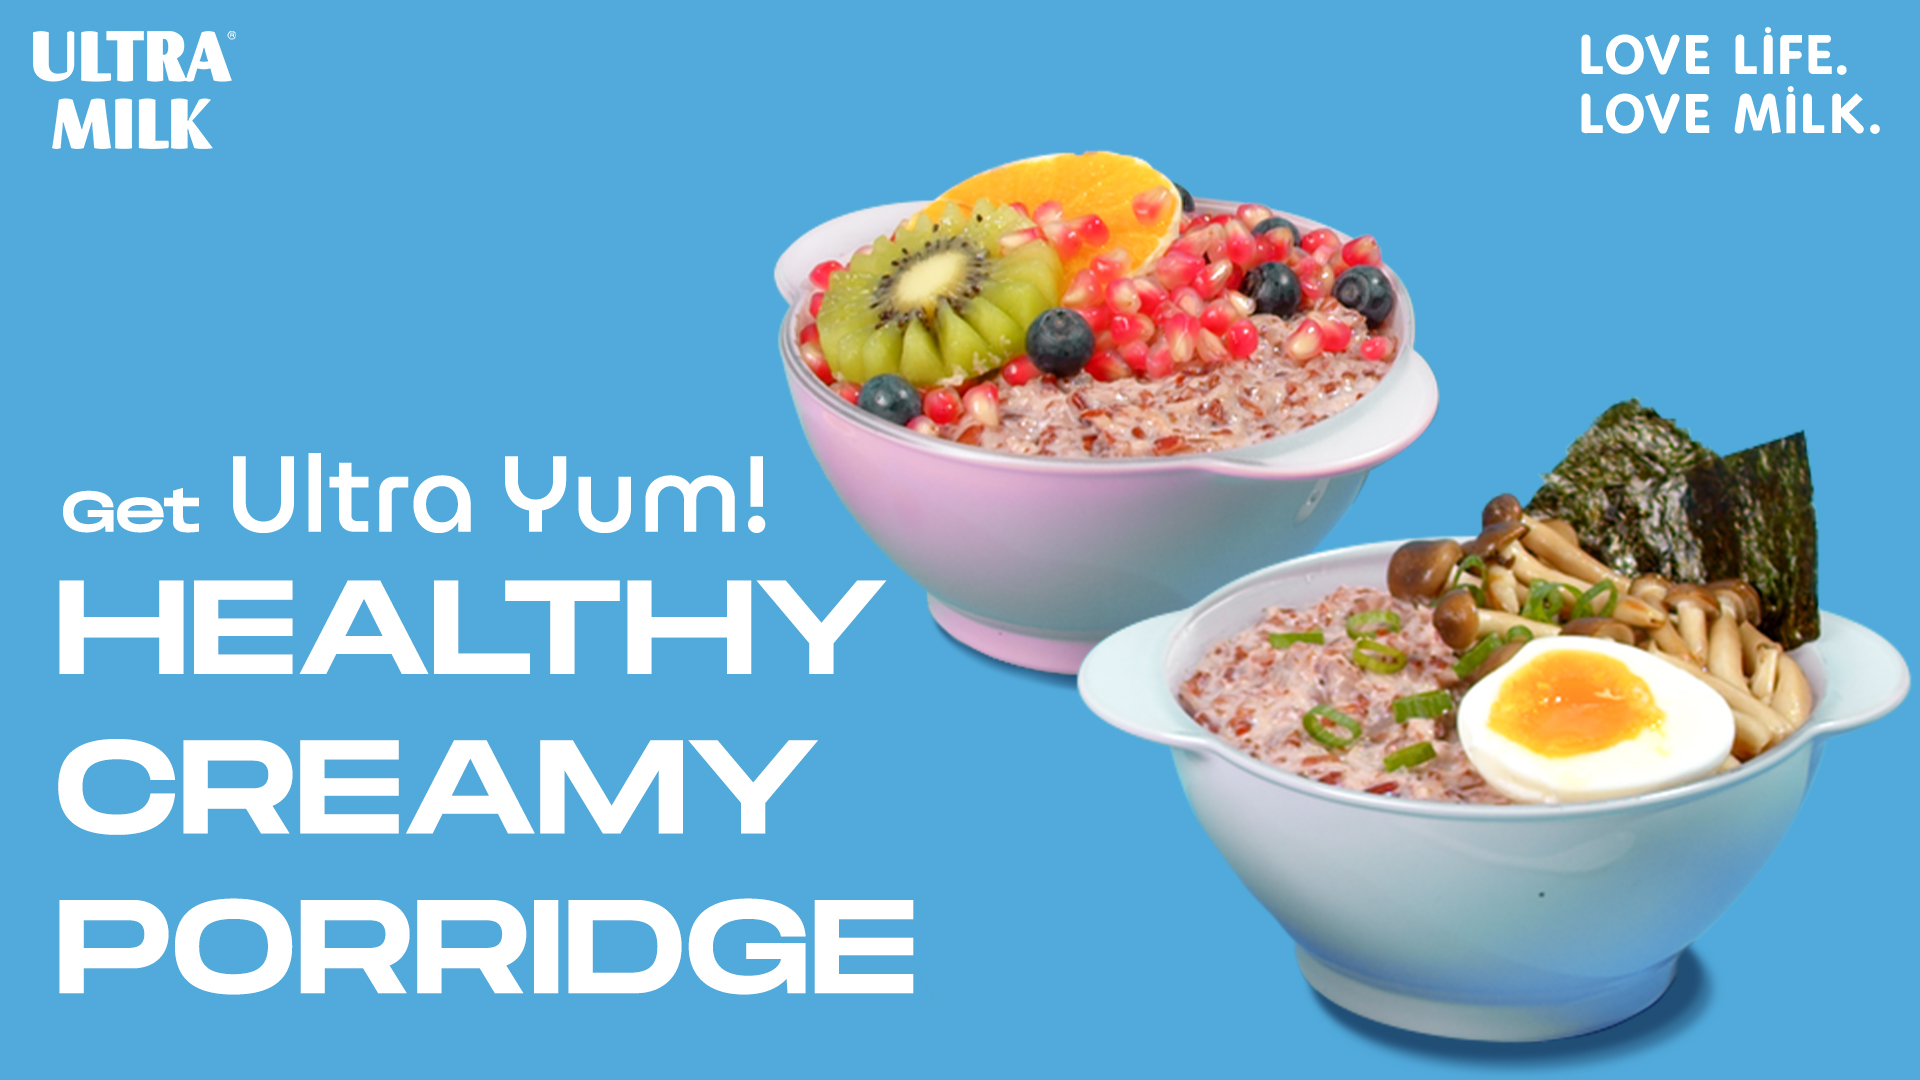 Get Ultra Yum! Healthy Creamy Porridge